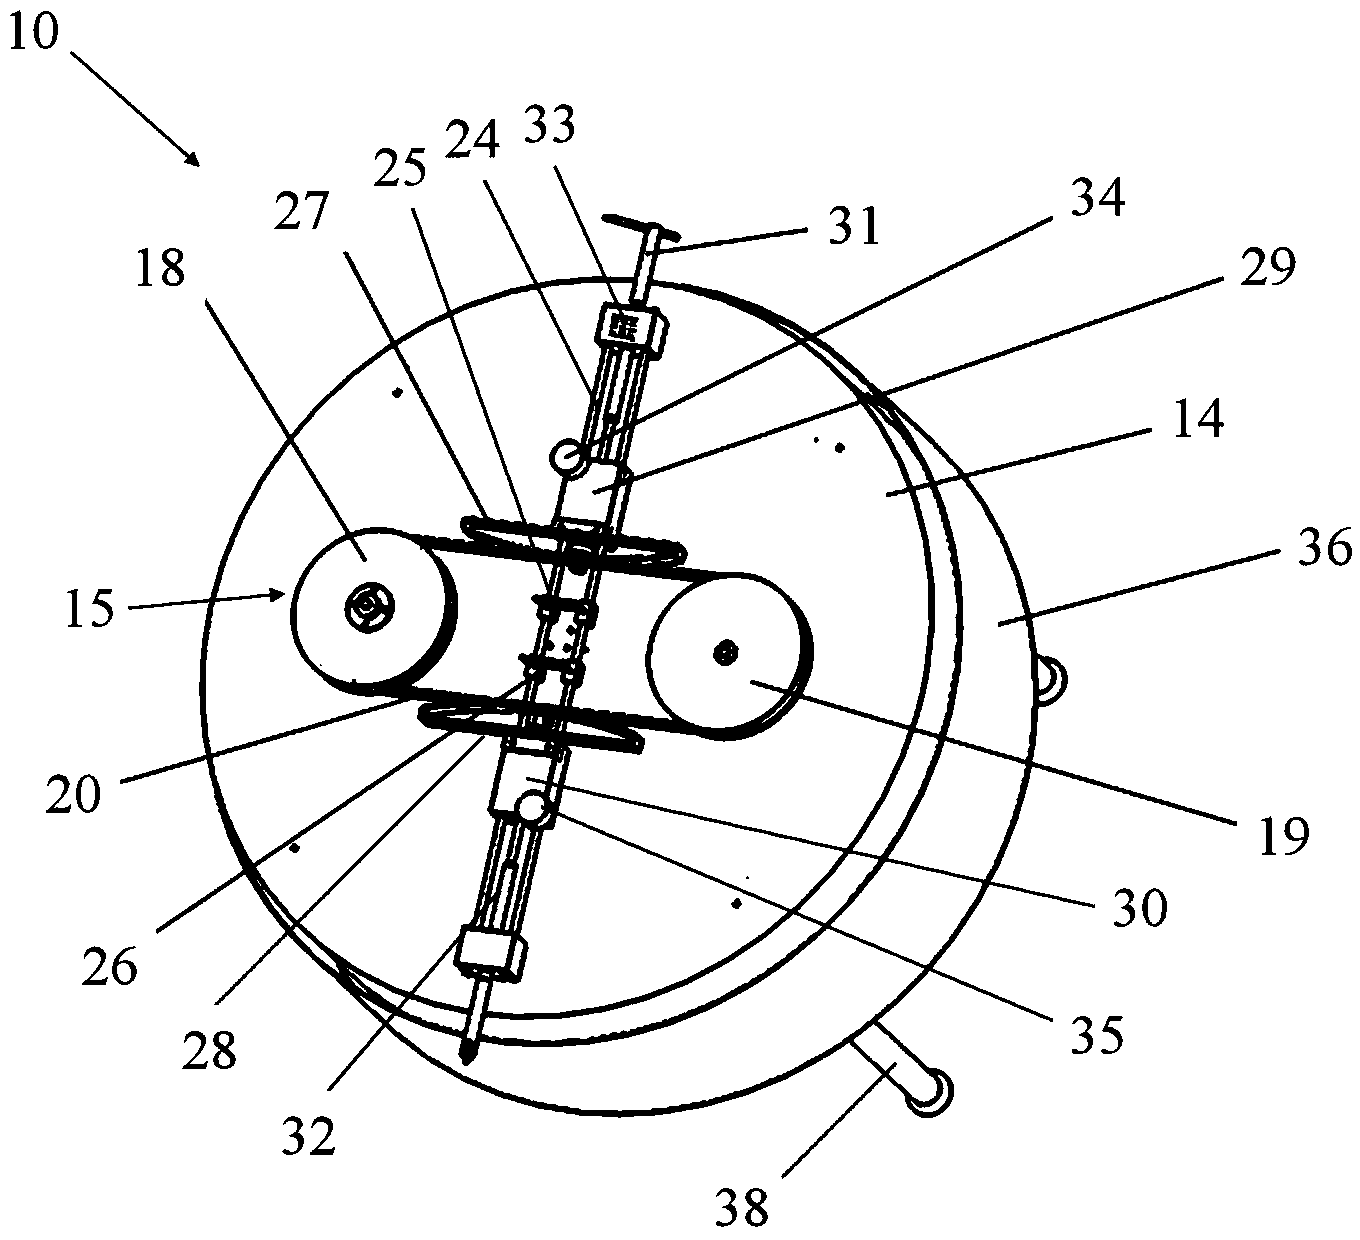 Coriolis acceleration demonstration instrument and coriolis inertia force measuring method